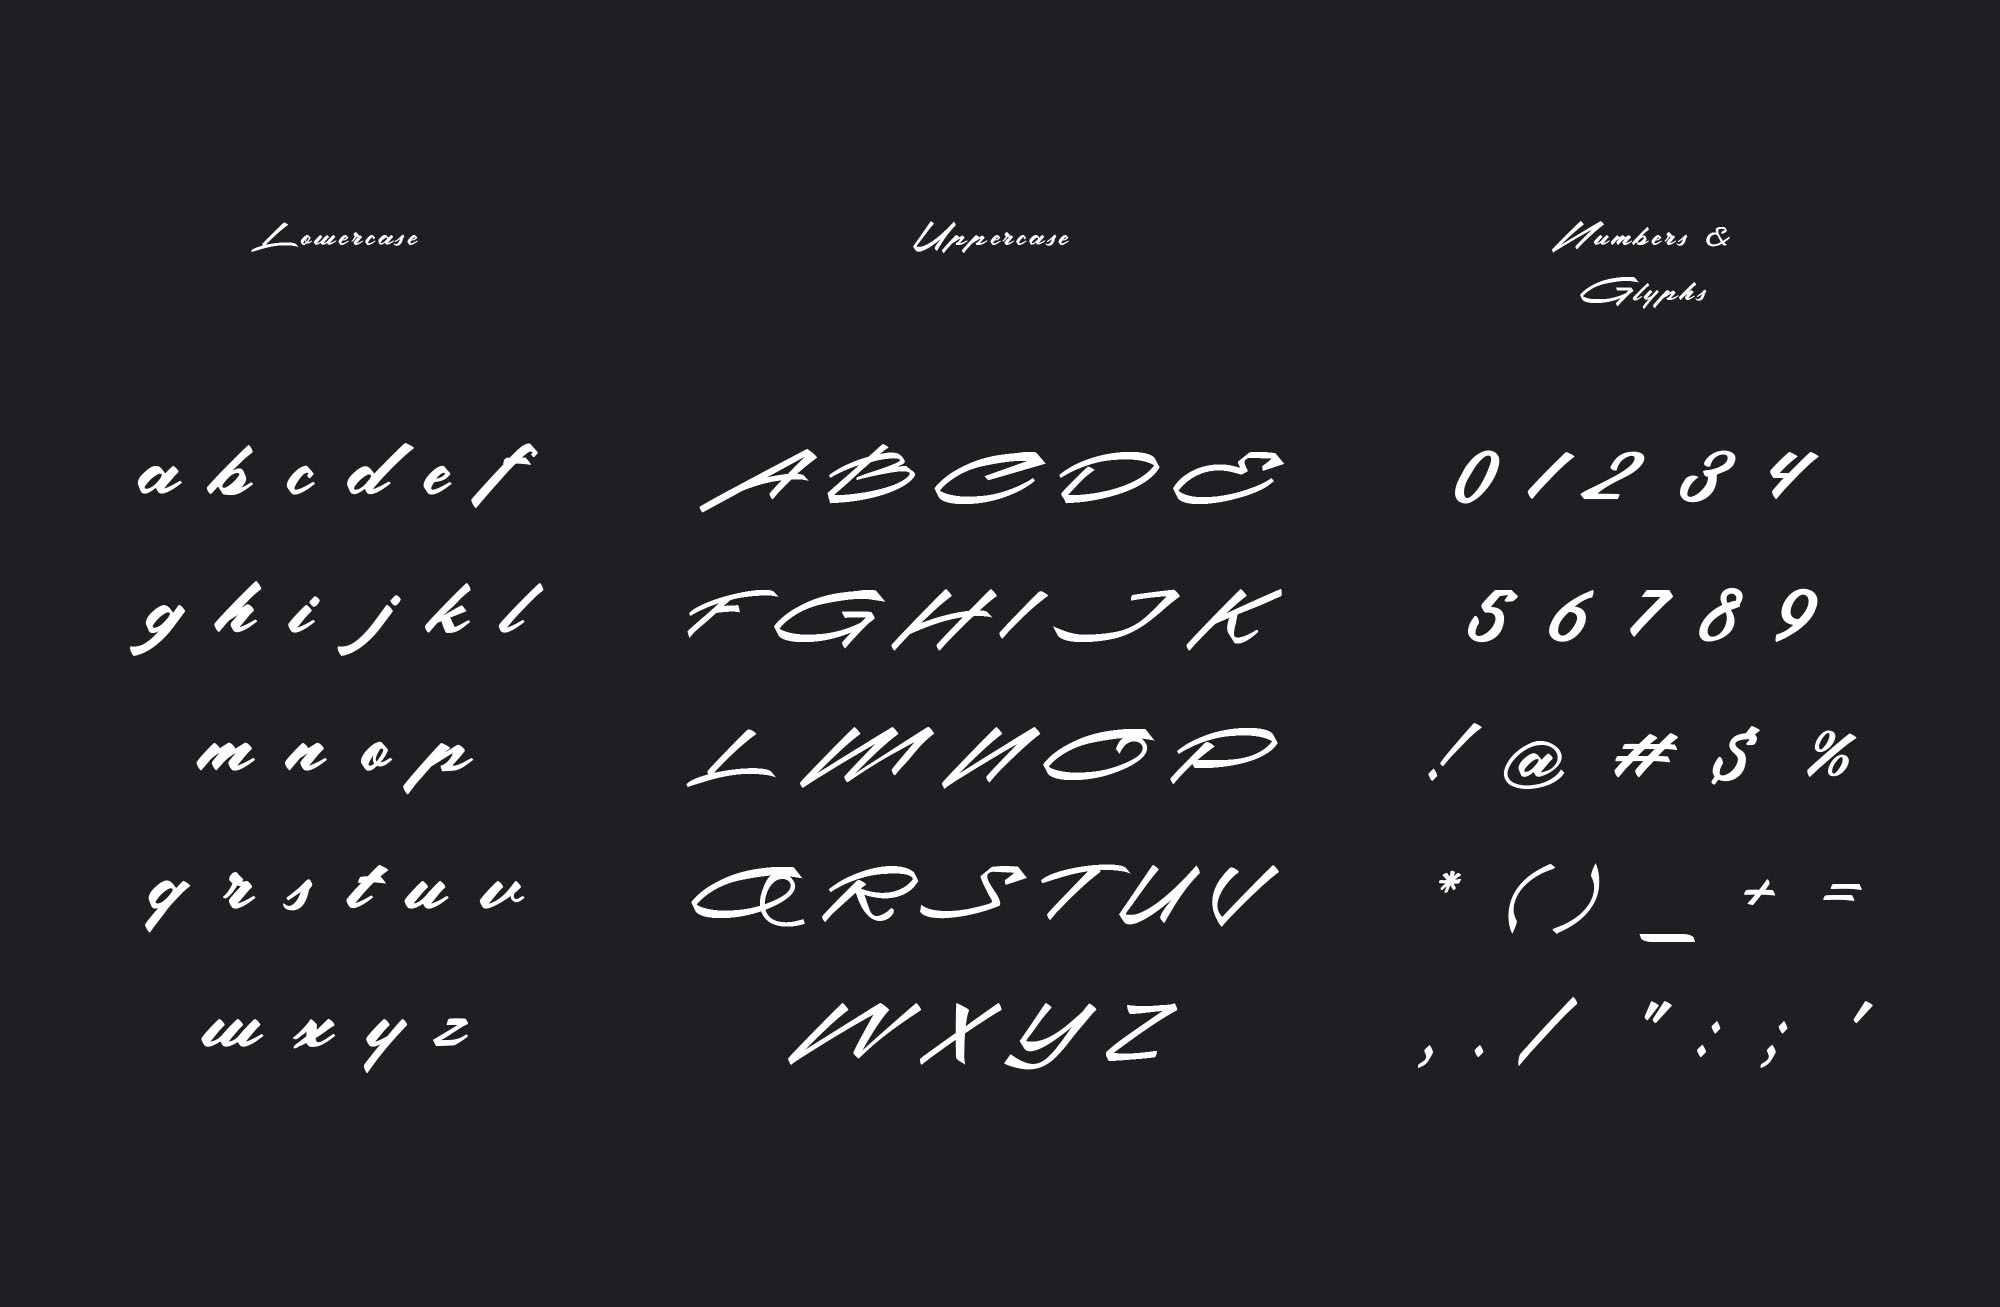 书法/手写风格英文斜体字体 Christopher Calligraphic Typeface插图1